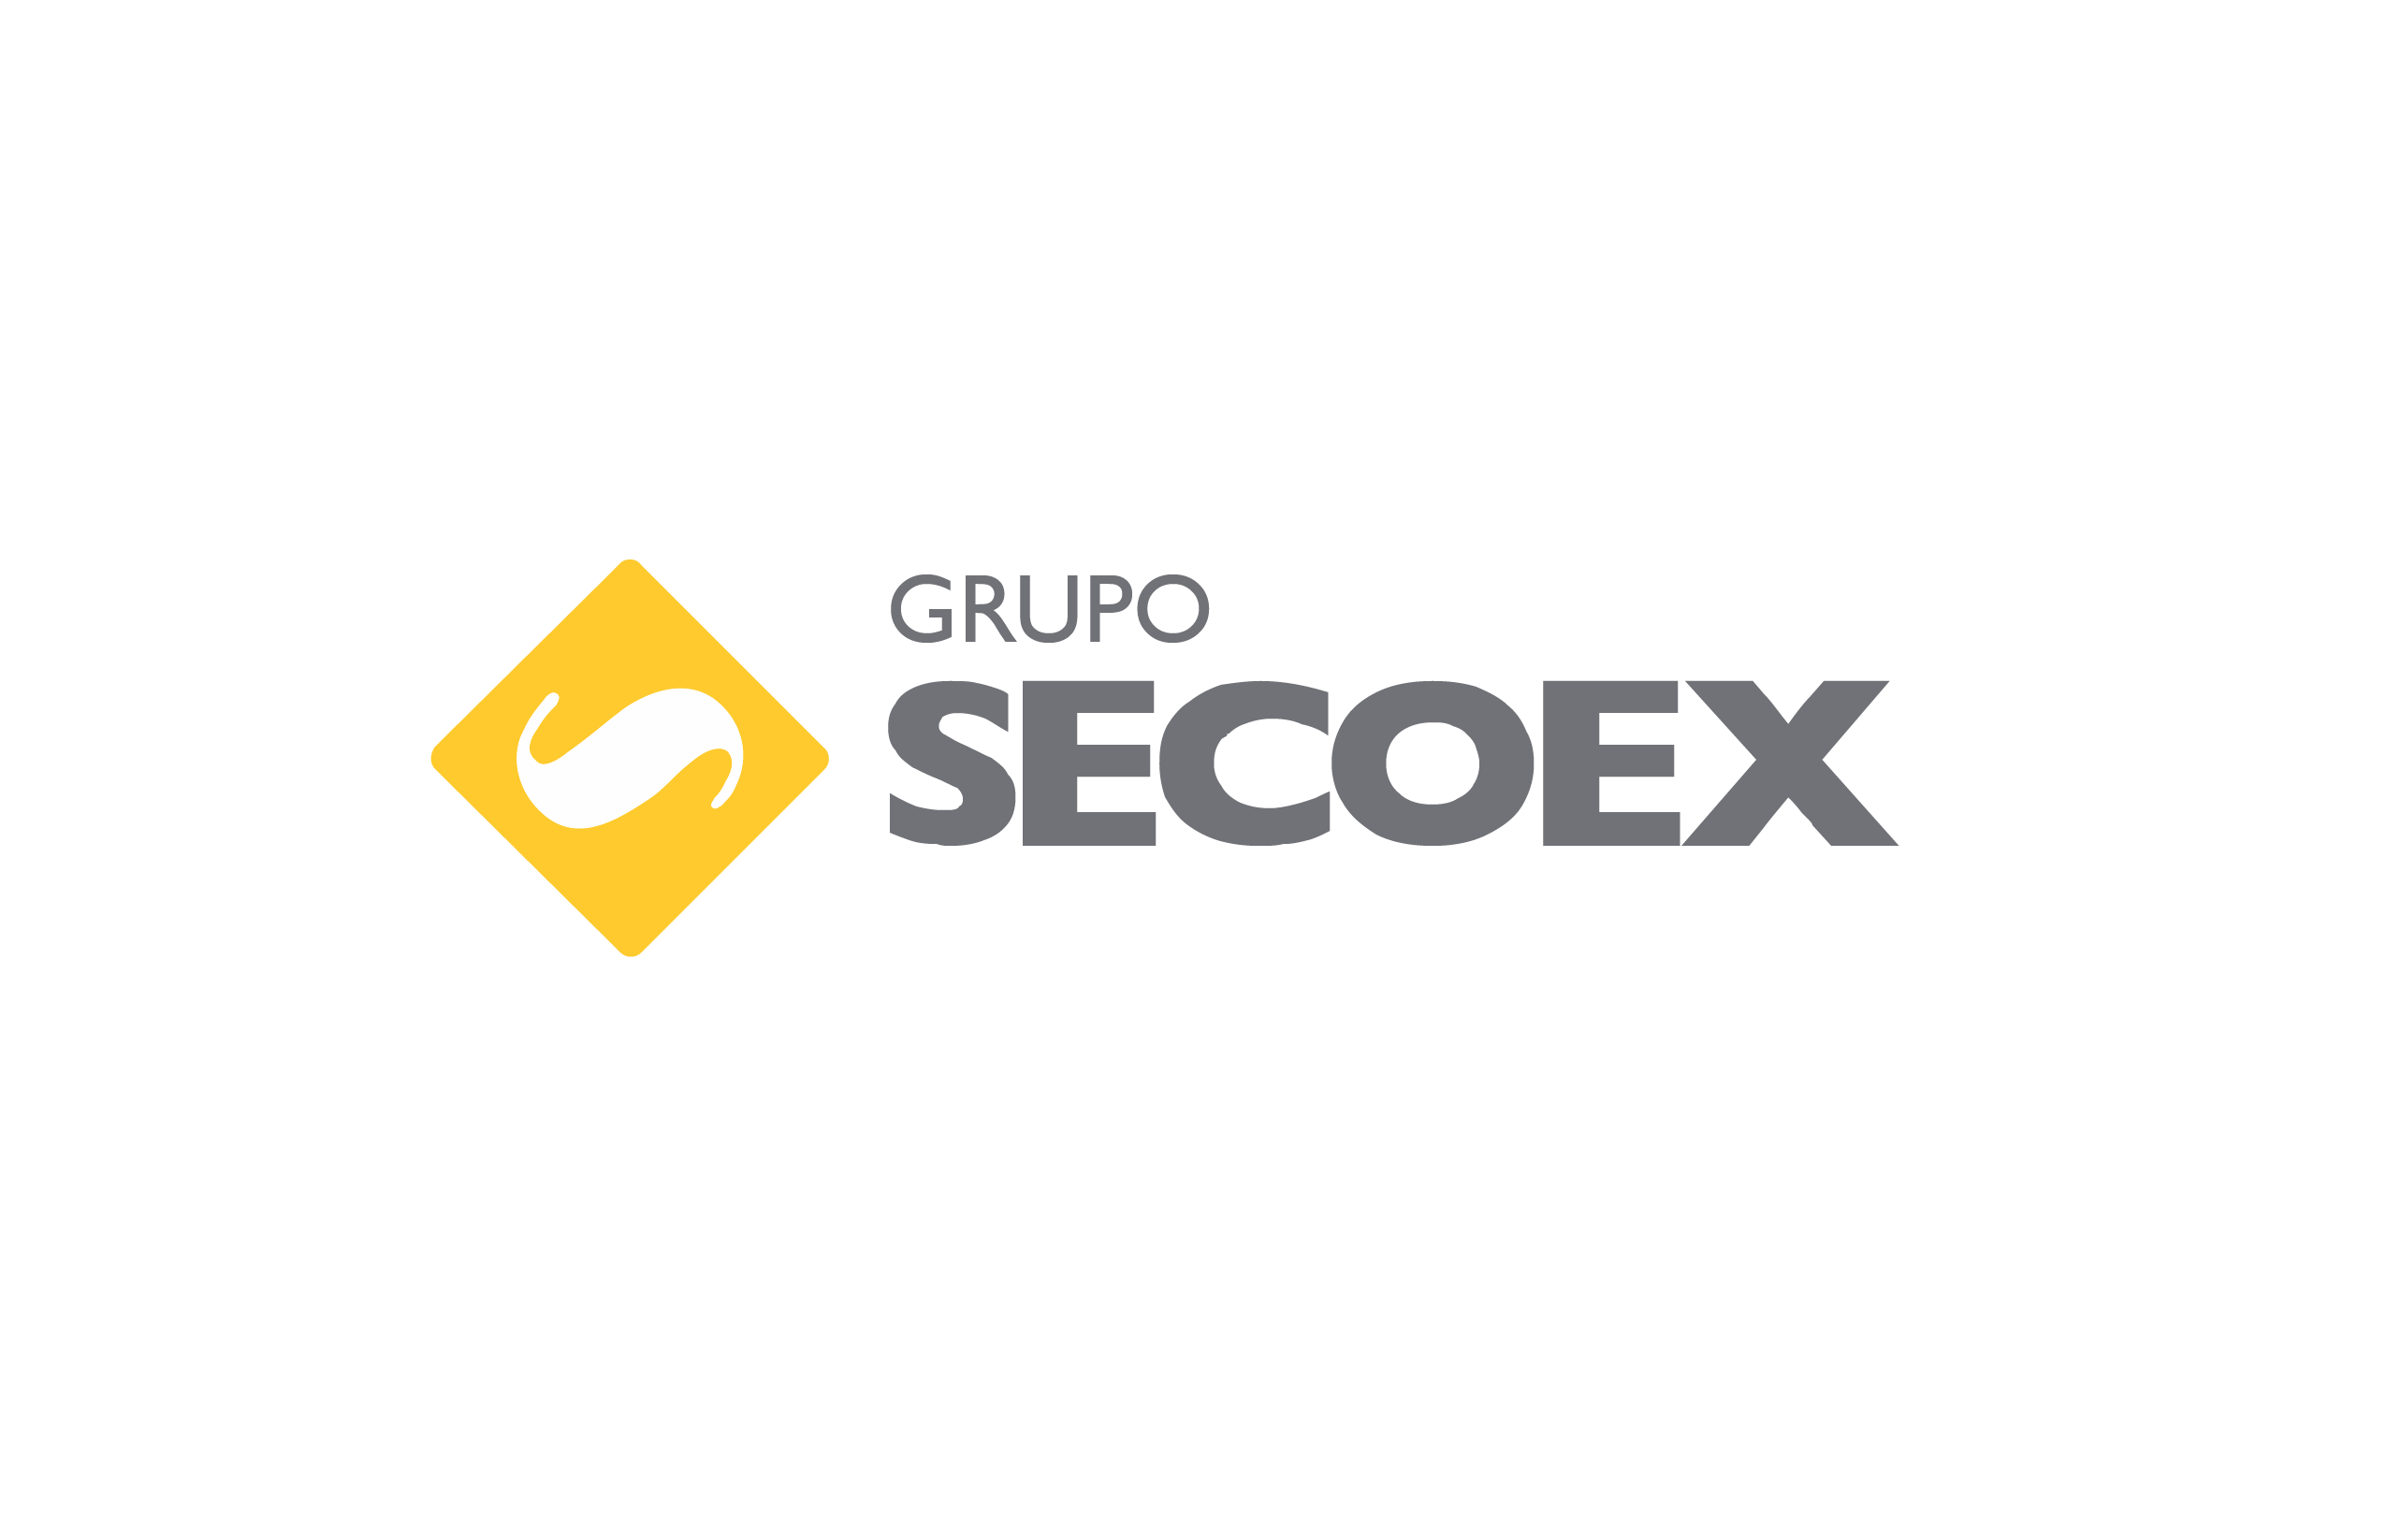 (c) Gruposecoex.com